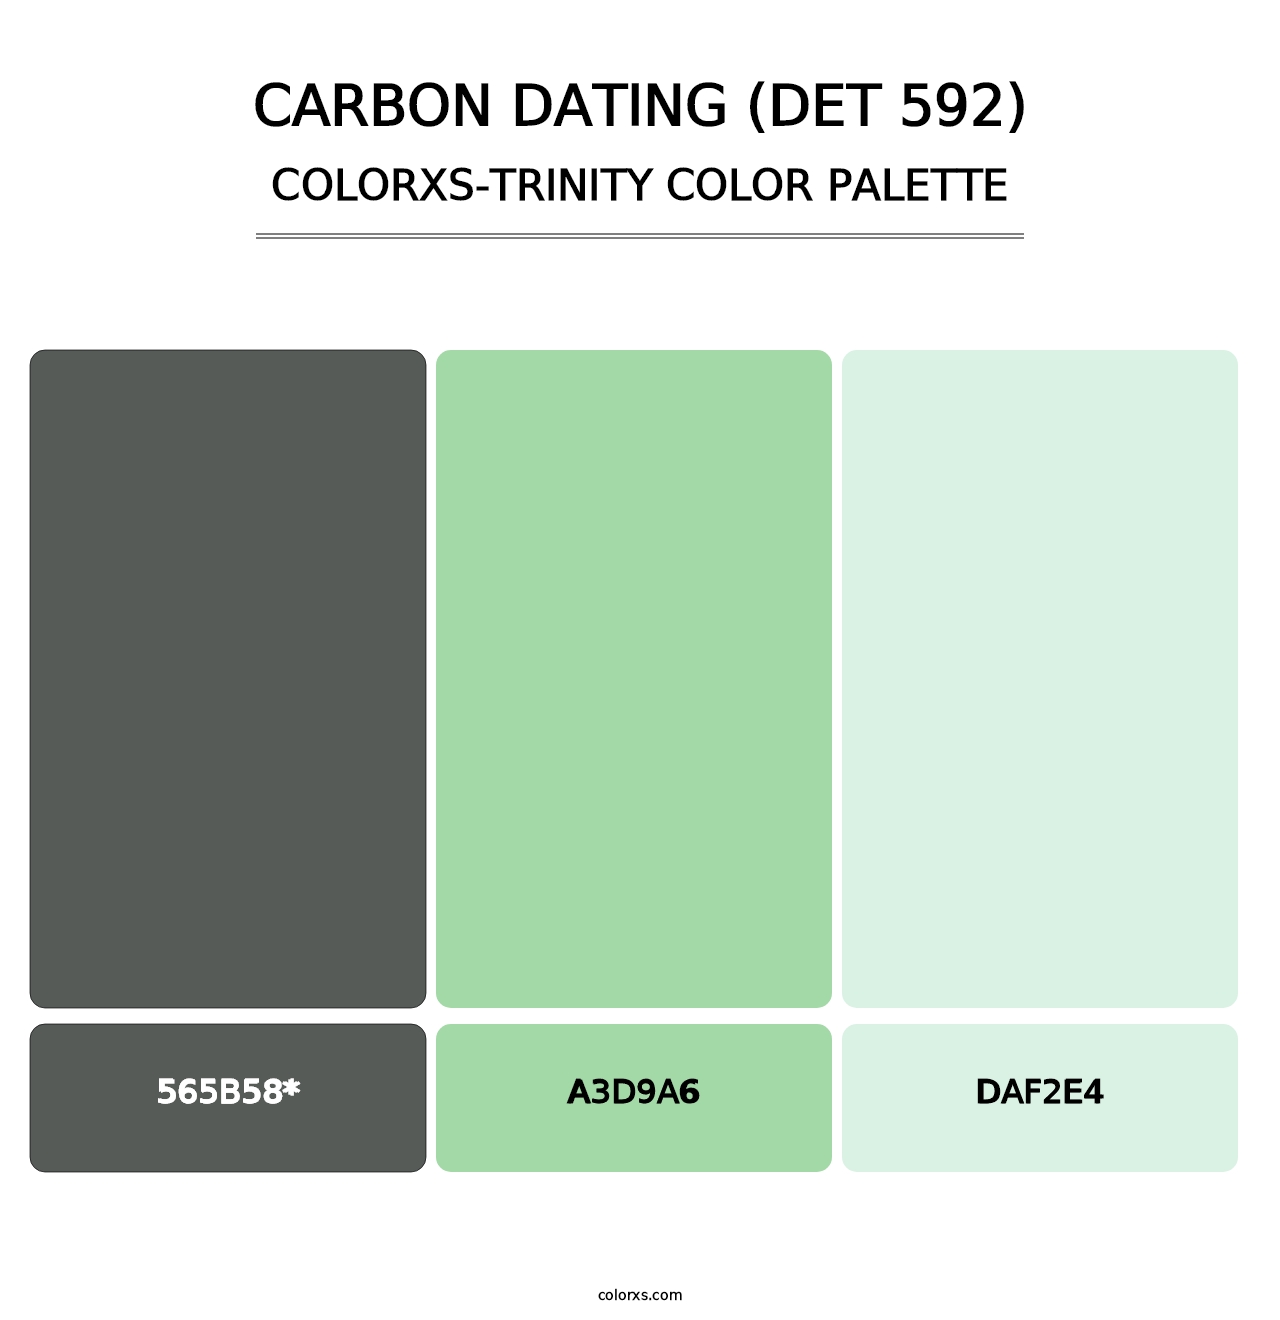 Carbon Dating (DET 592) - Colorxs Trinity Palette